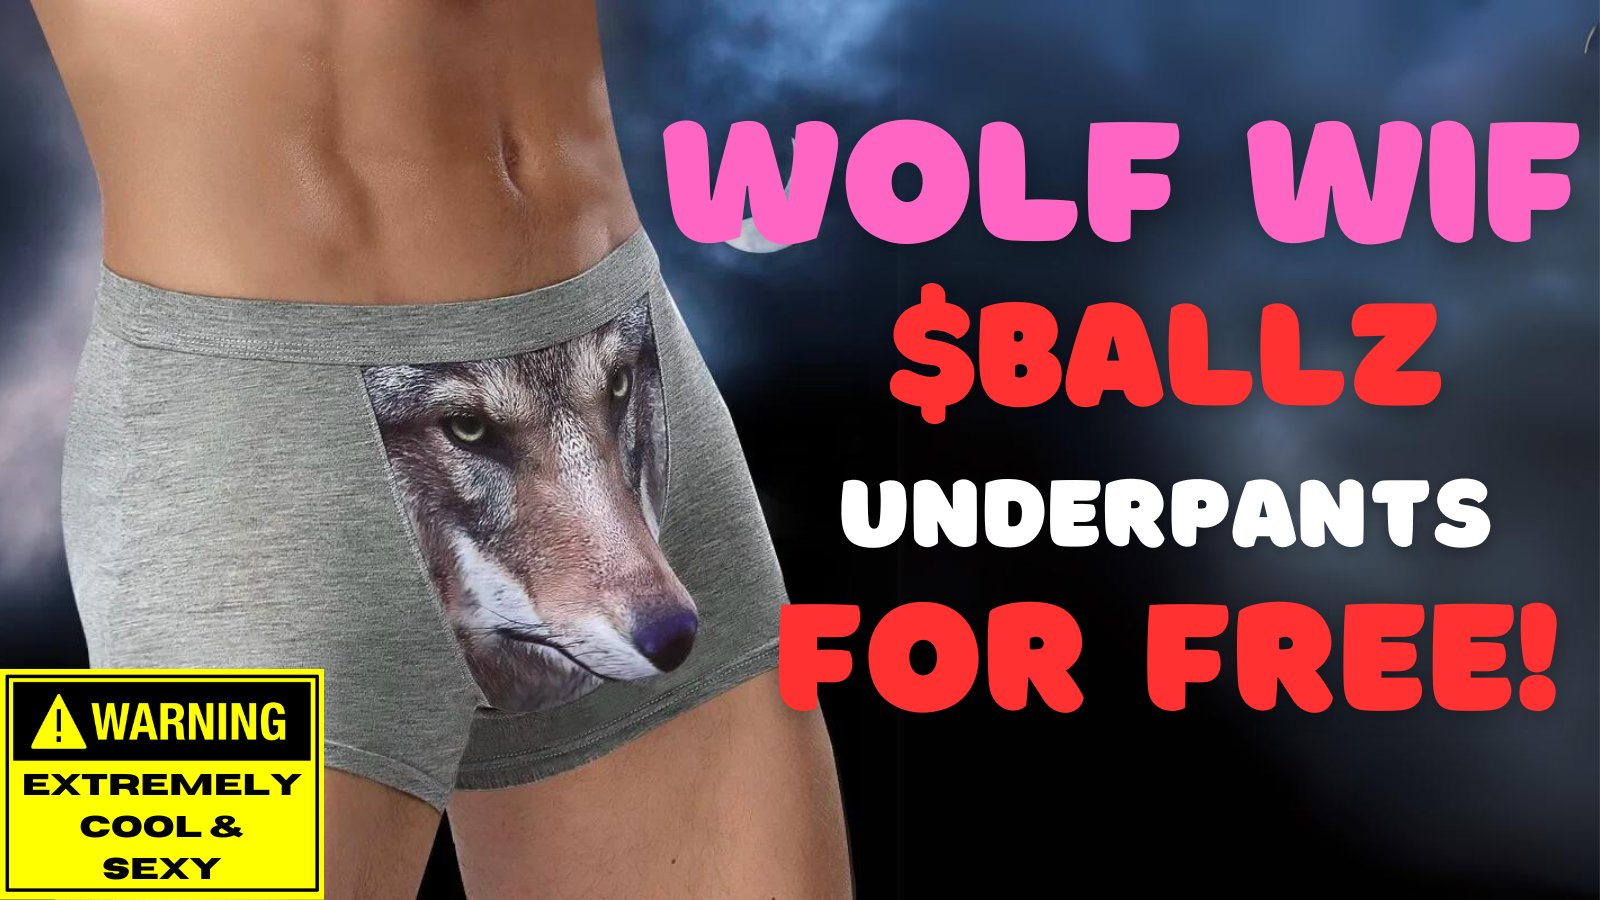 Alex Mason 👁△ on X: Get Wolf Wif $BALLZ underpants for free